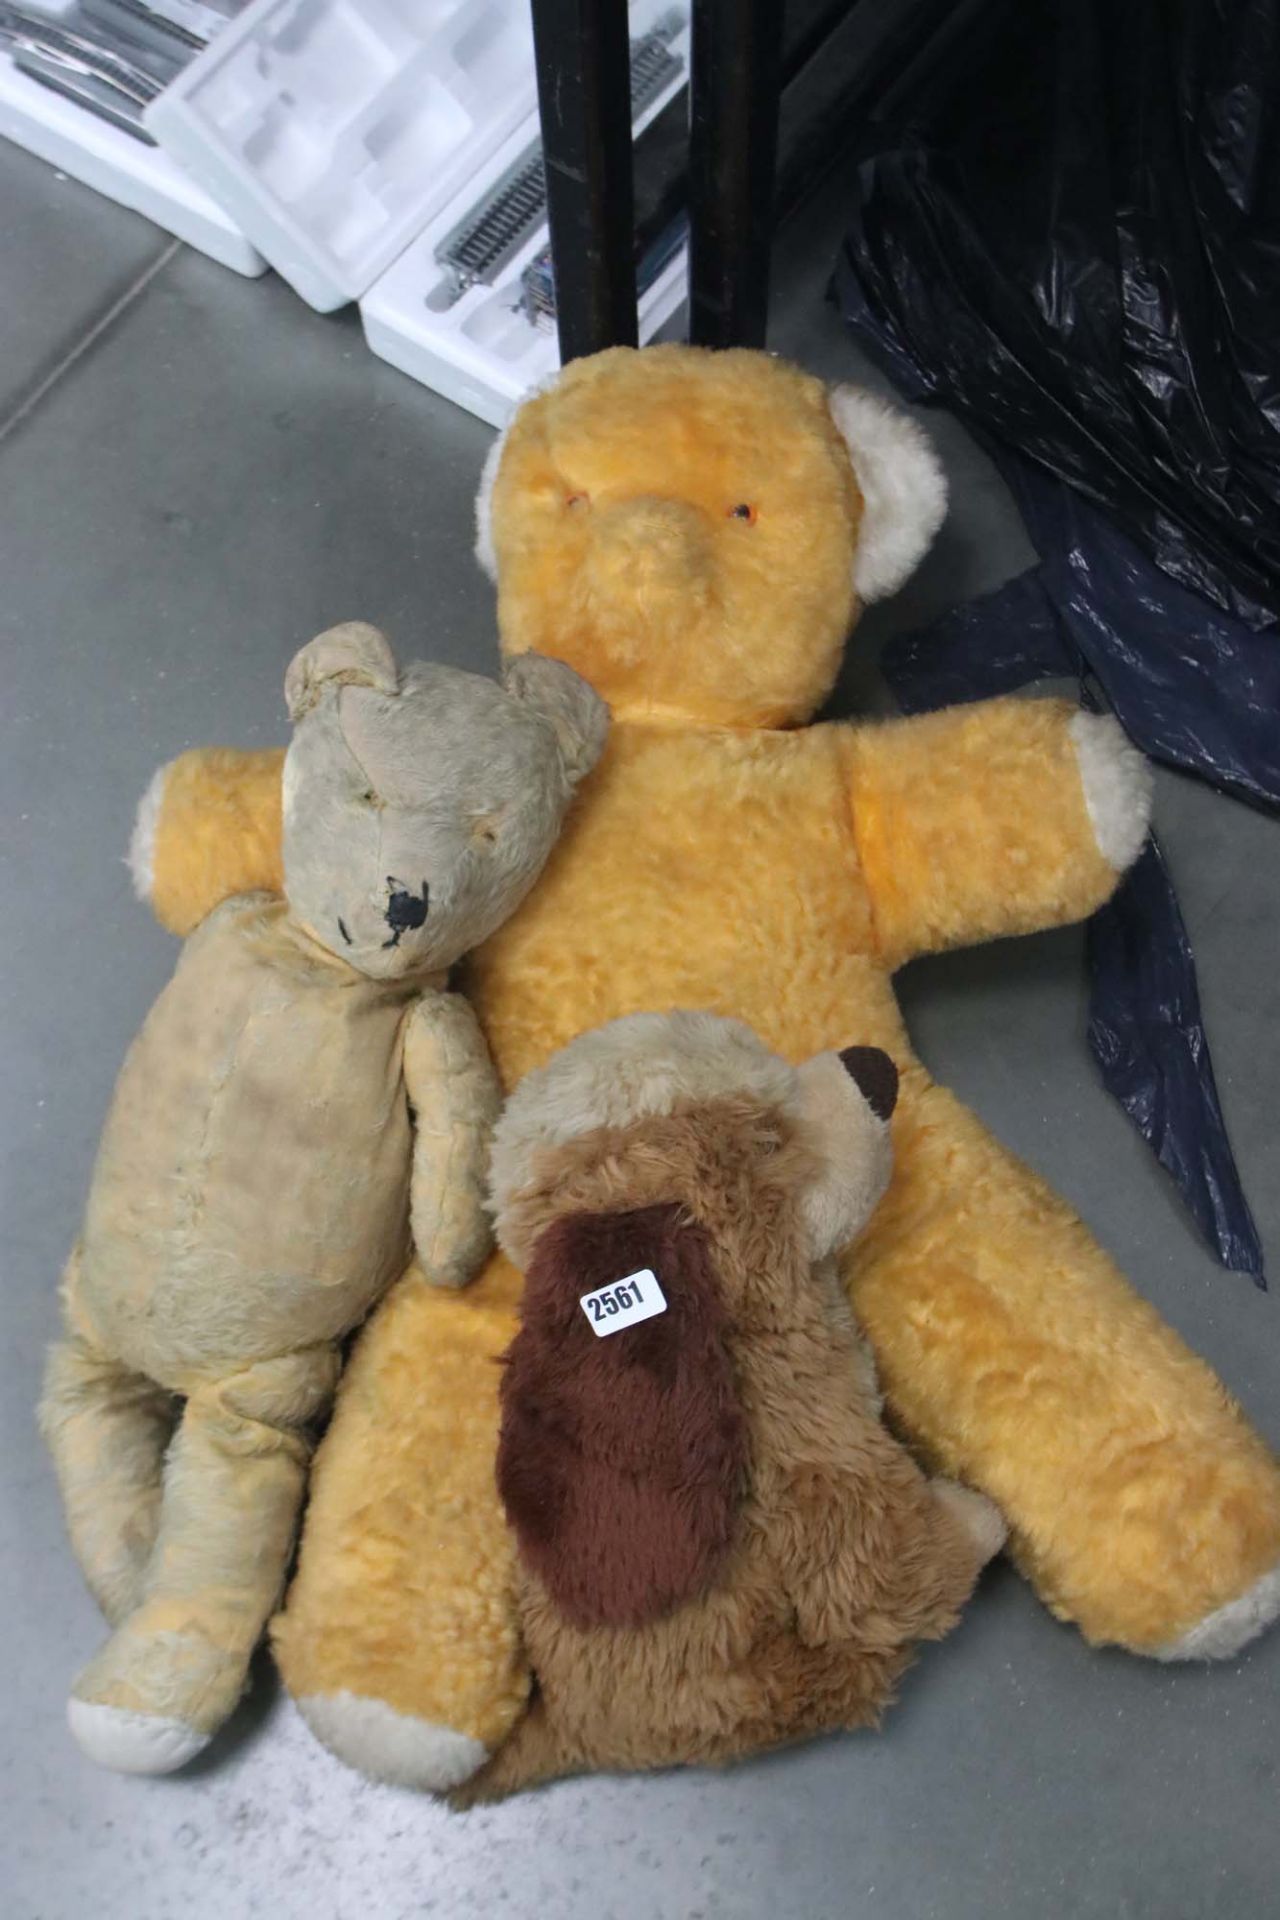 3 stuffed toys to include teddy bears, etc